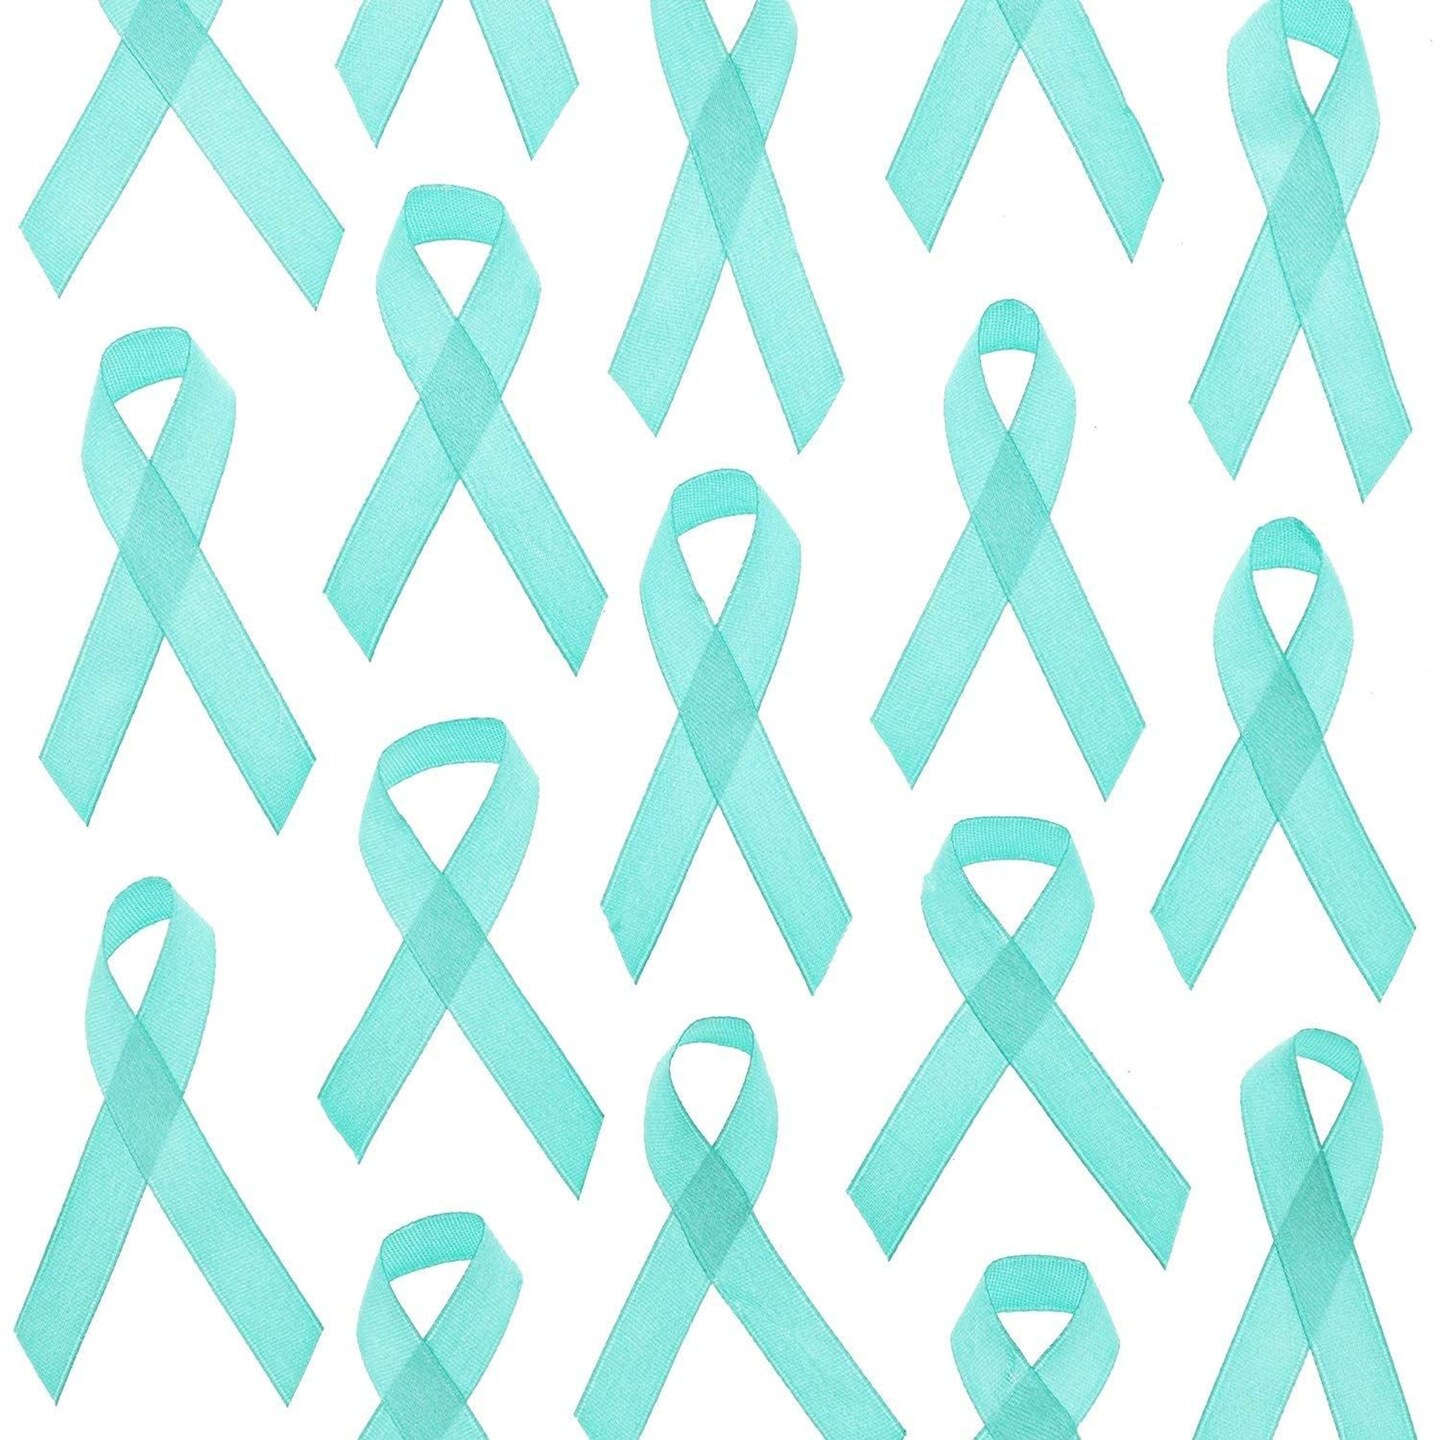 Light Blue Fabric Awareness Ribbons - 250 ribbons / bag